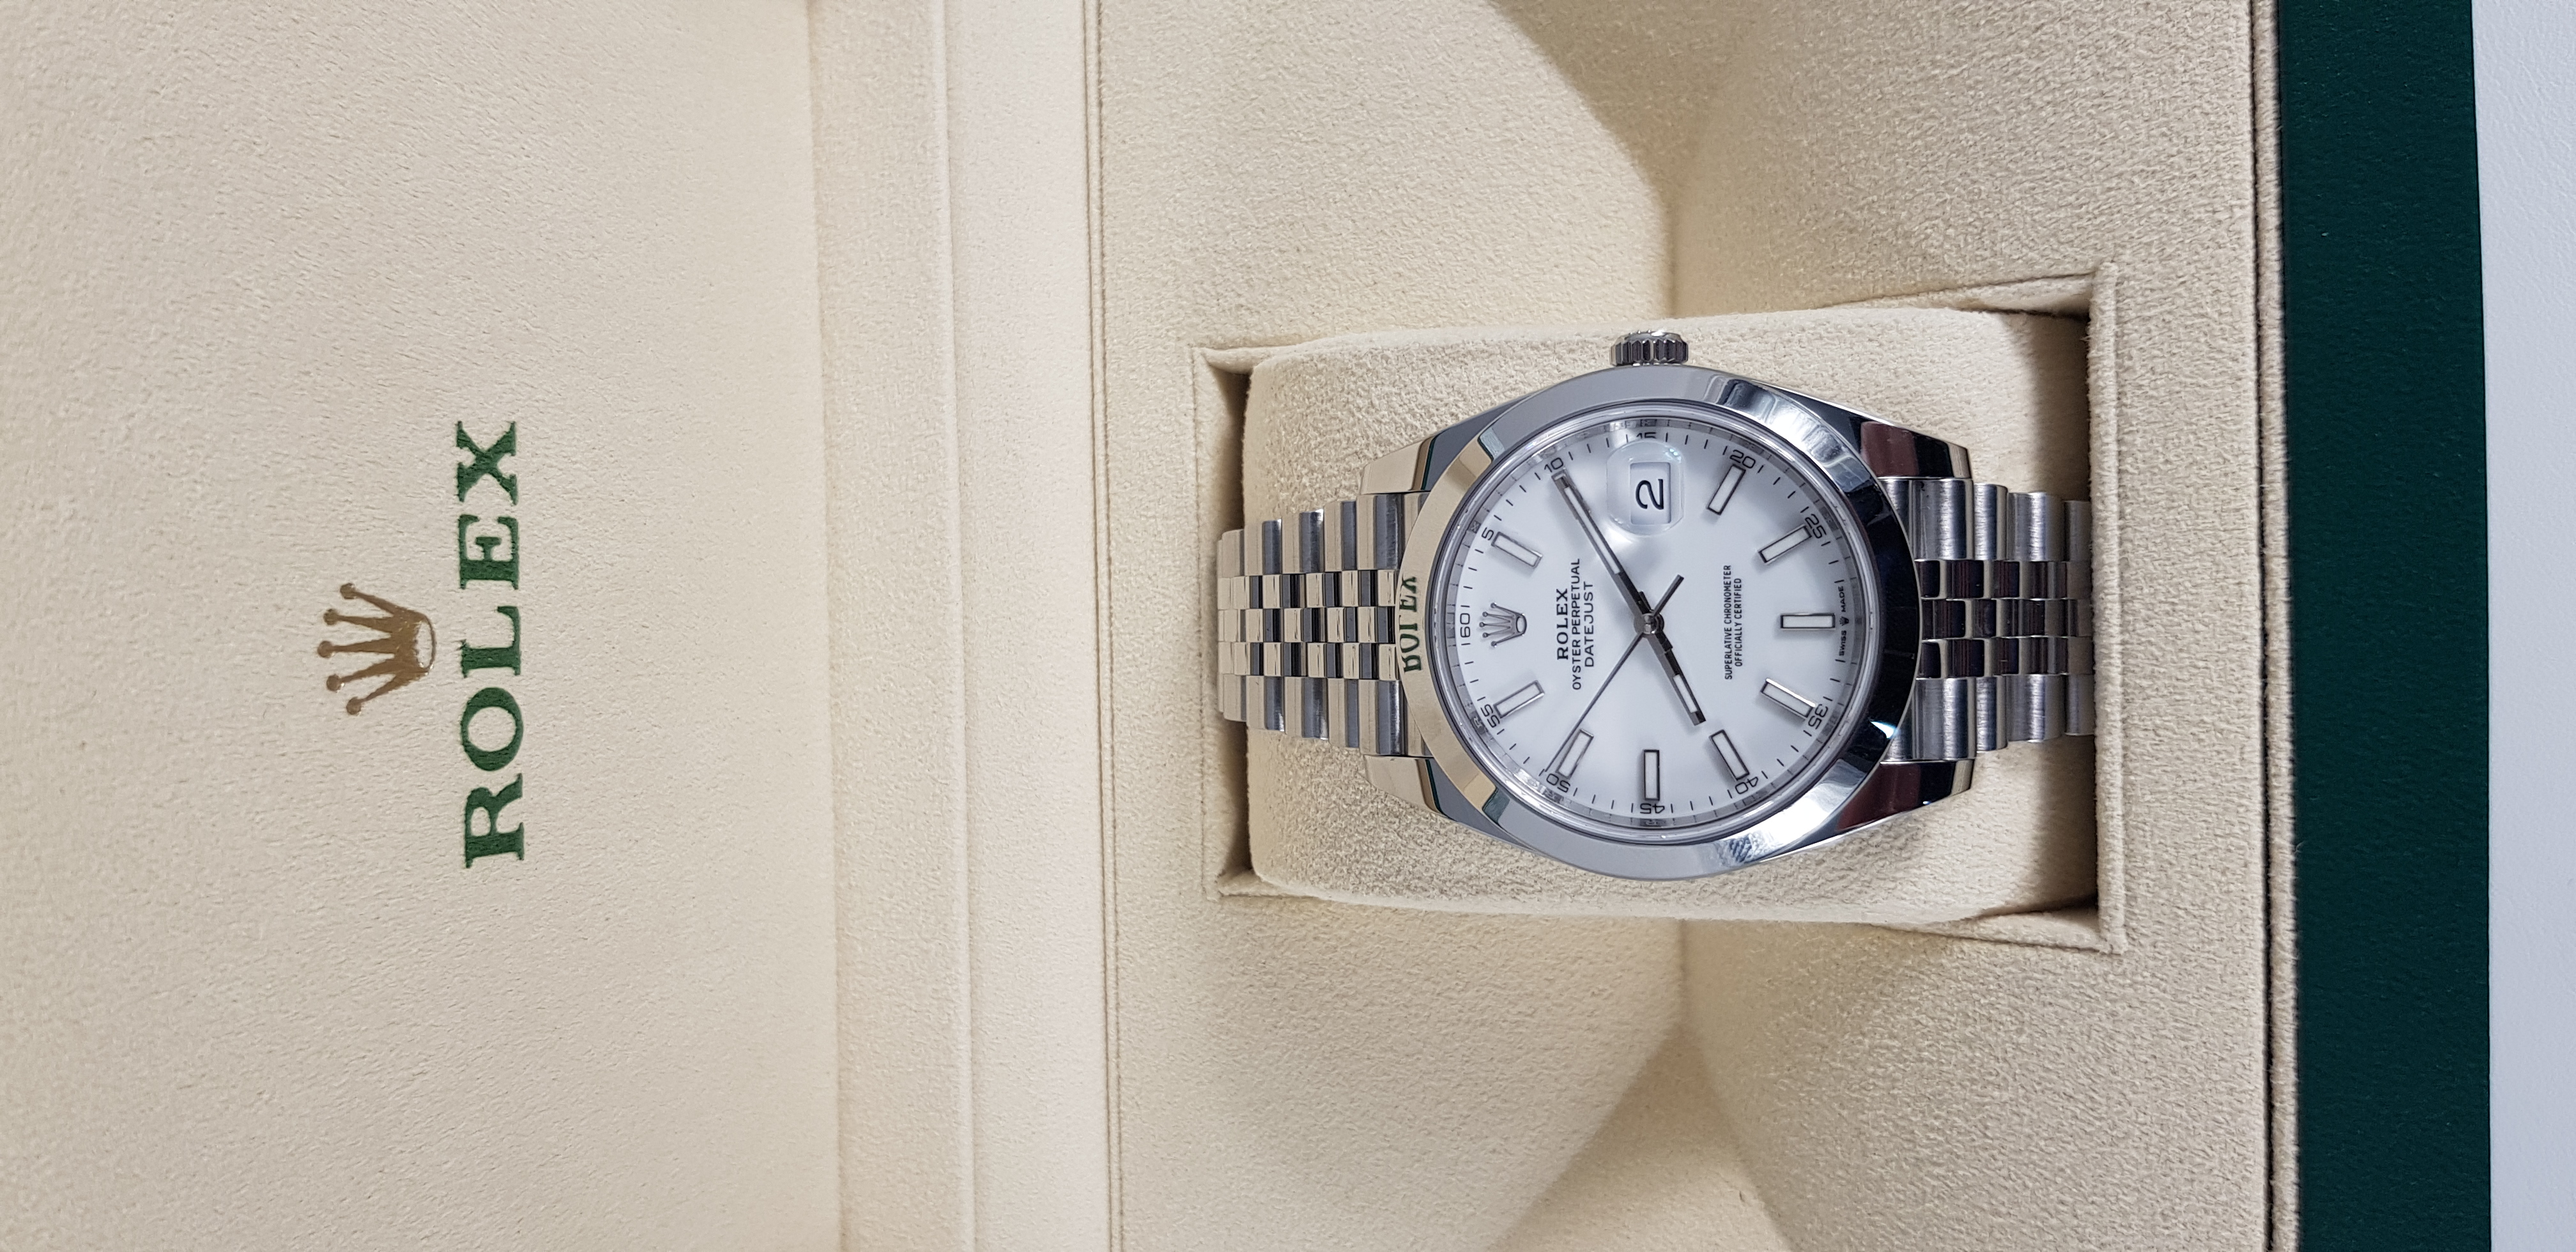 Часы Rolex Datejust 41mm Stainless Steel 126300